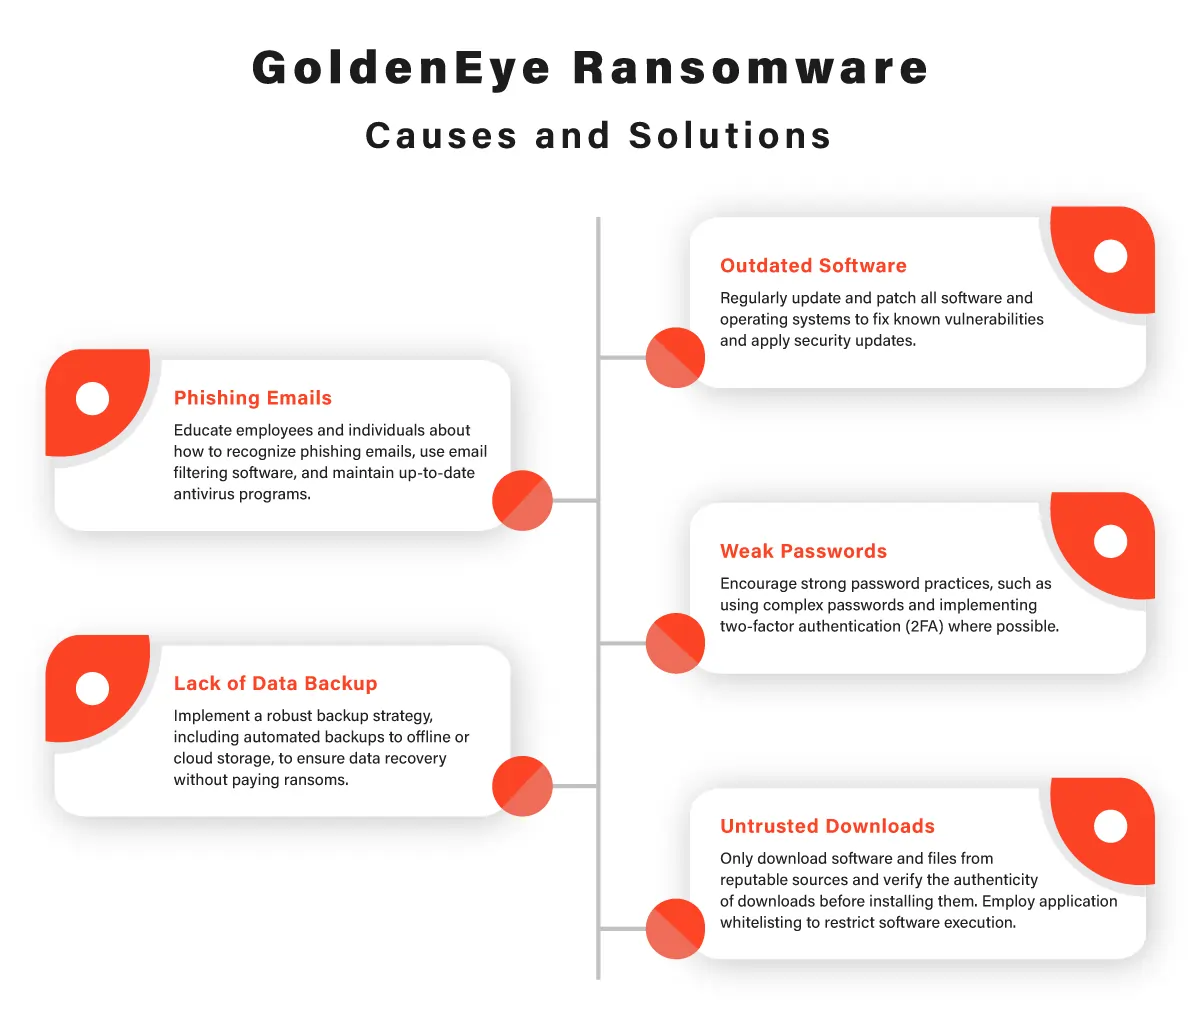 Understanding GoldenEye Ransomware